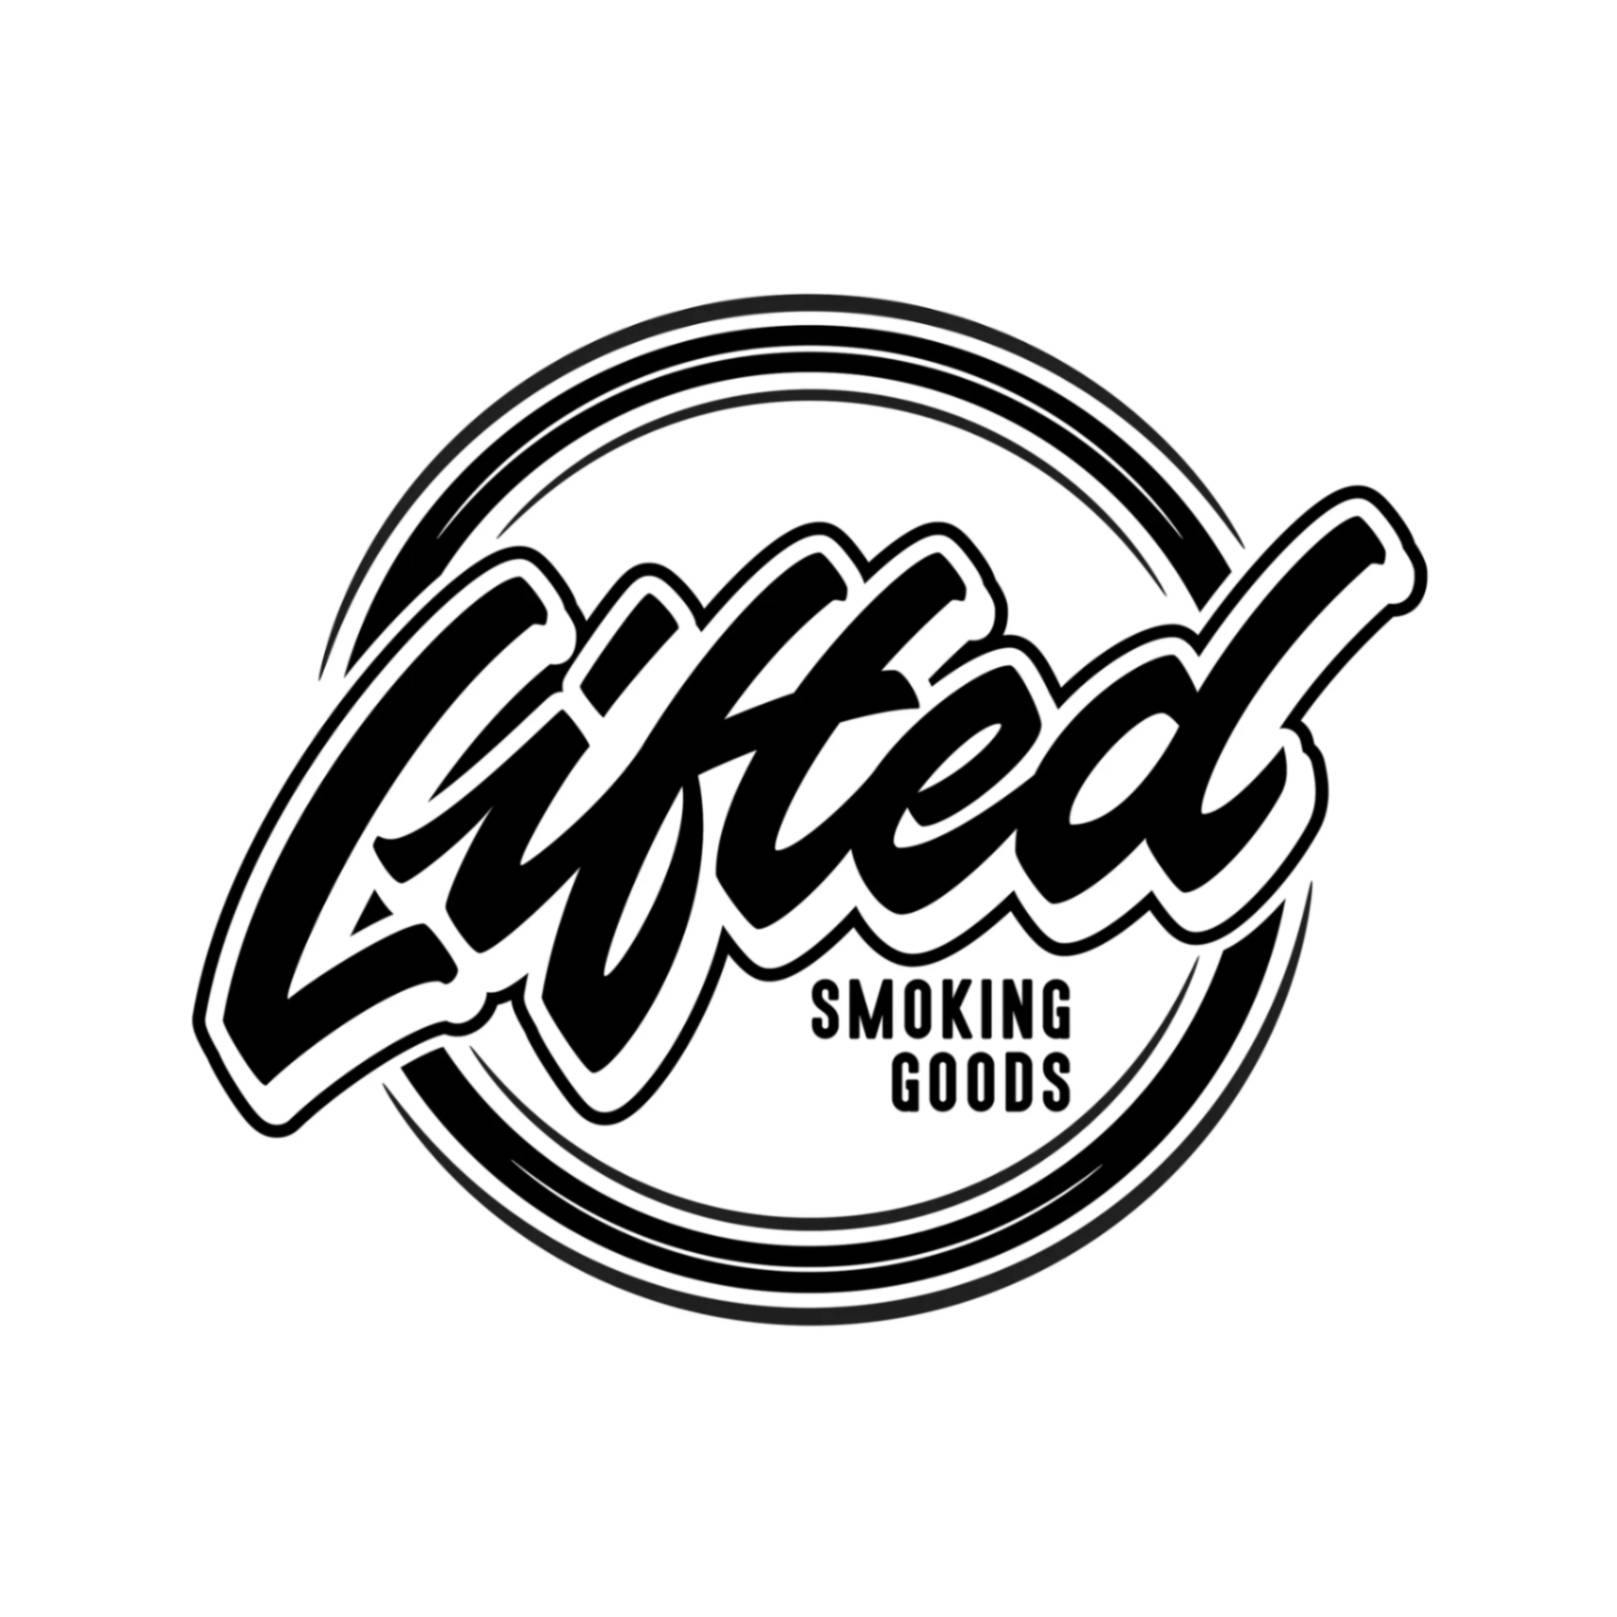 Lifted Smoking Goods